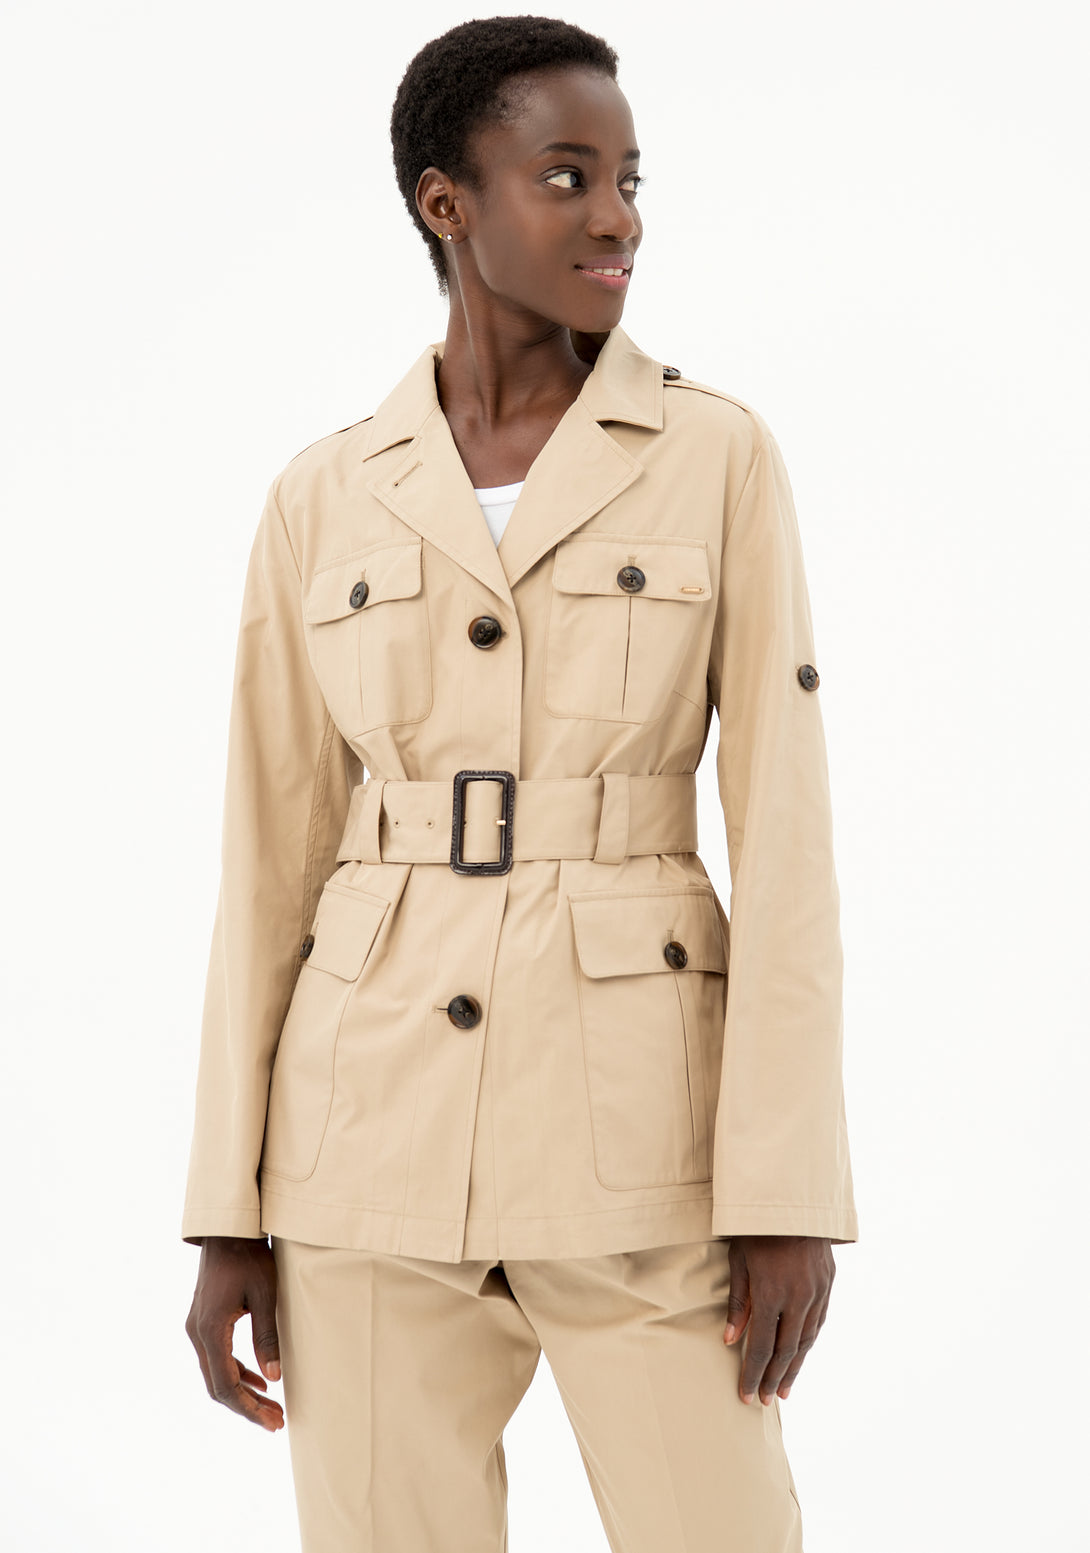 Saharan jacket regular fit with pockets